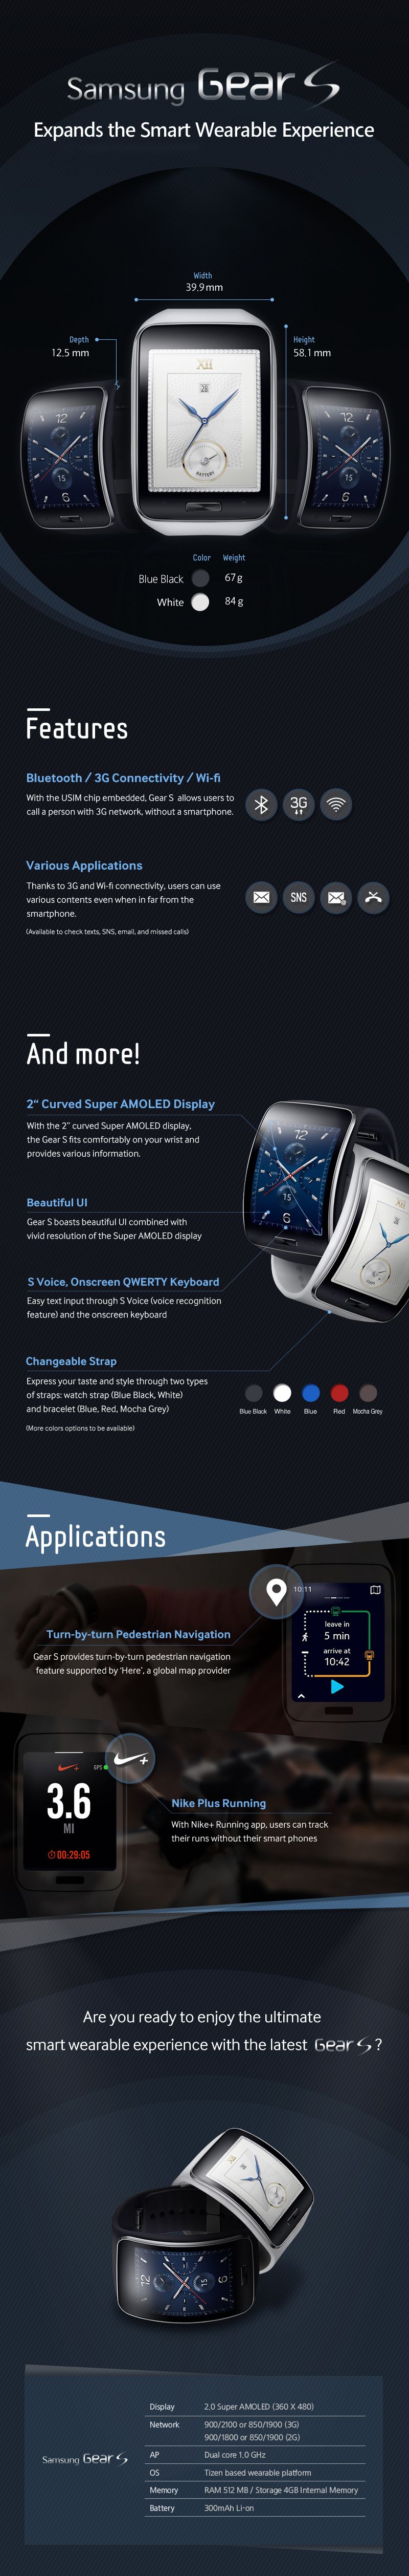 Samsung-Gear-S-Infographic